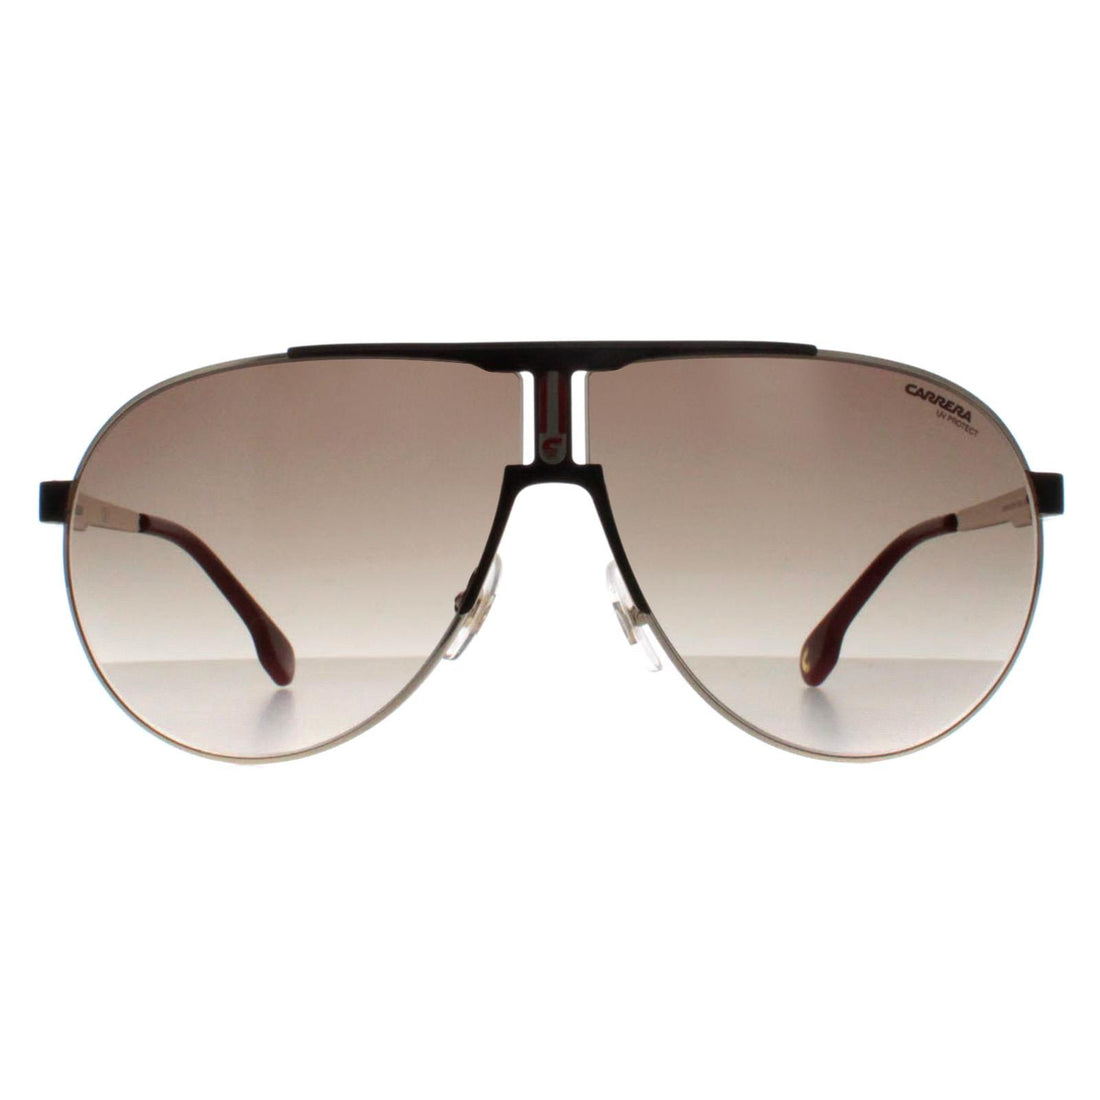 Carrera 1005/S Sunglasses Gold Black Brown Gradient